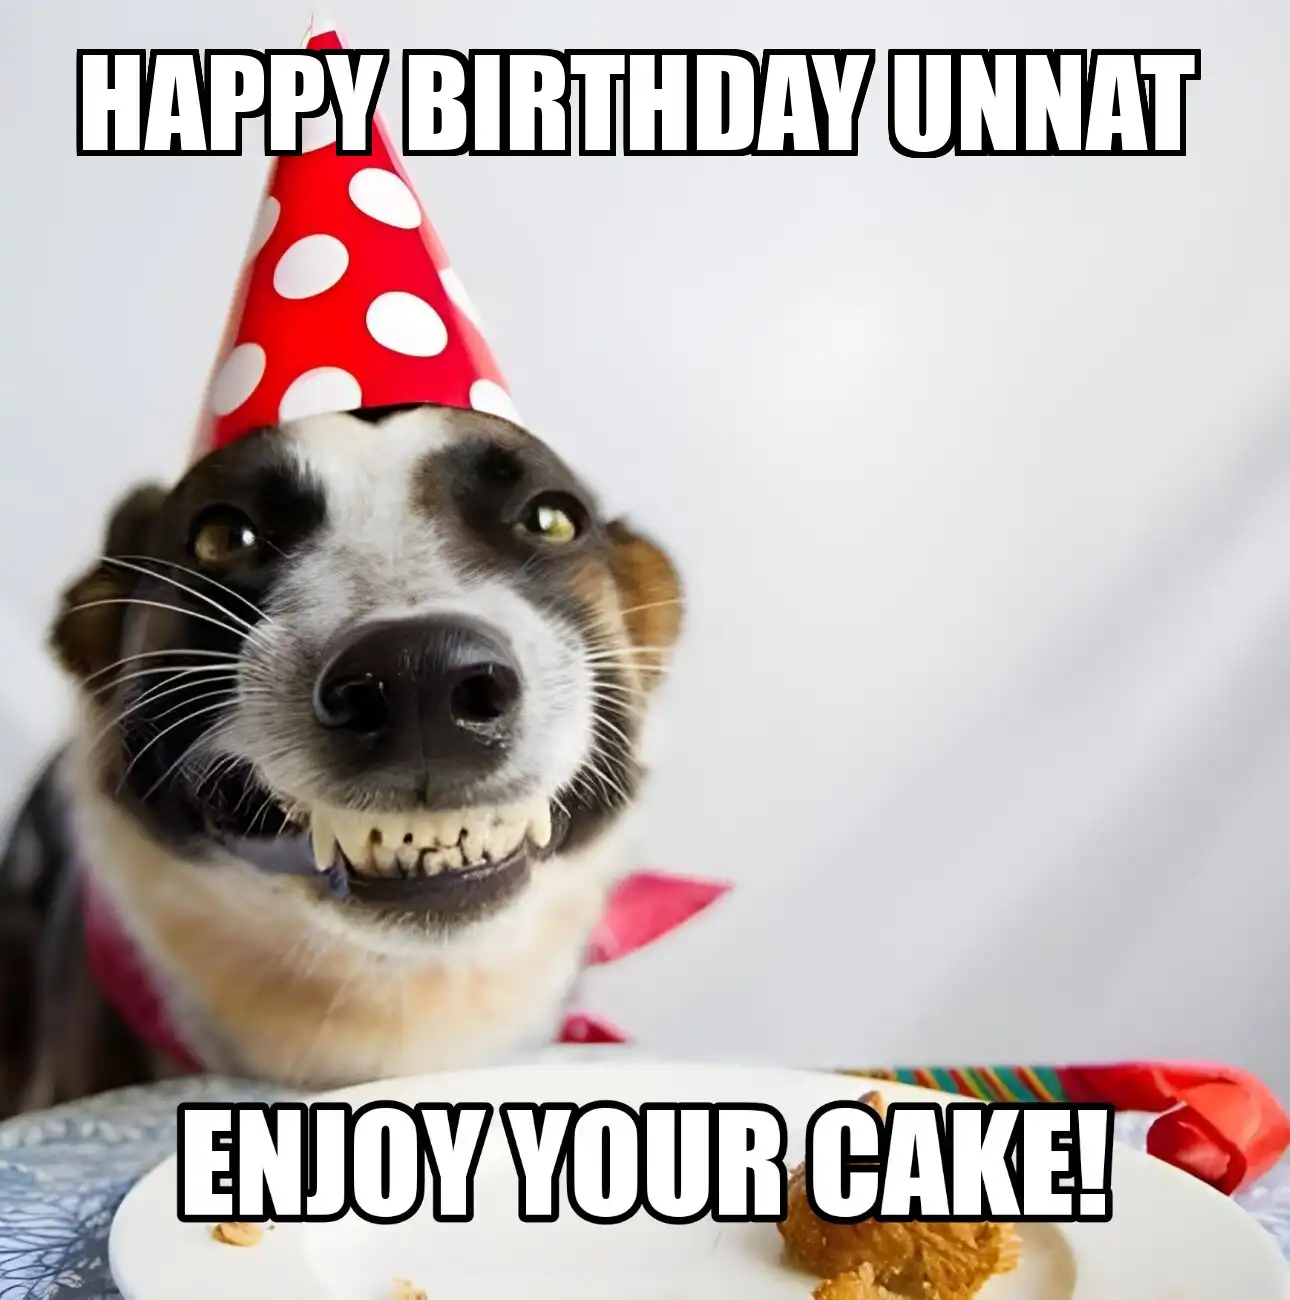 Happy Birthday Unnat Enjoy Your Cake Dog Meme